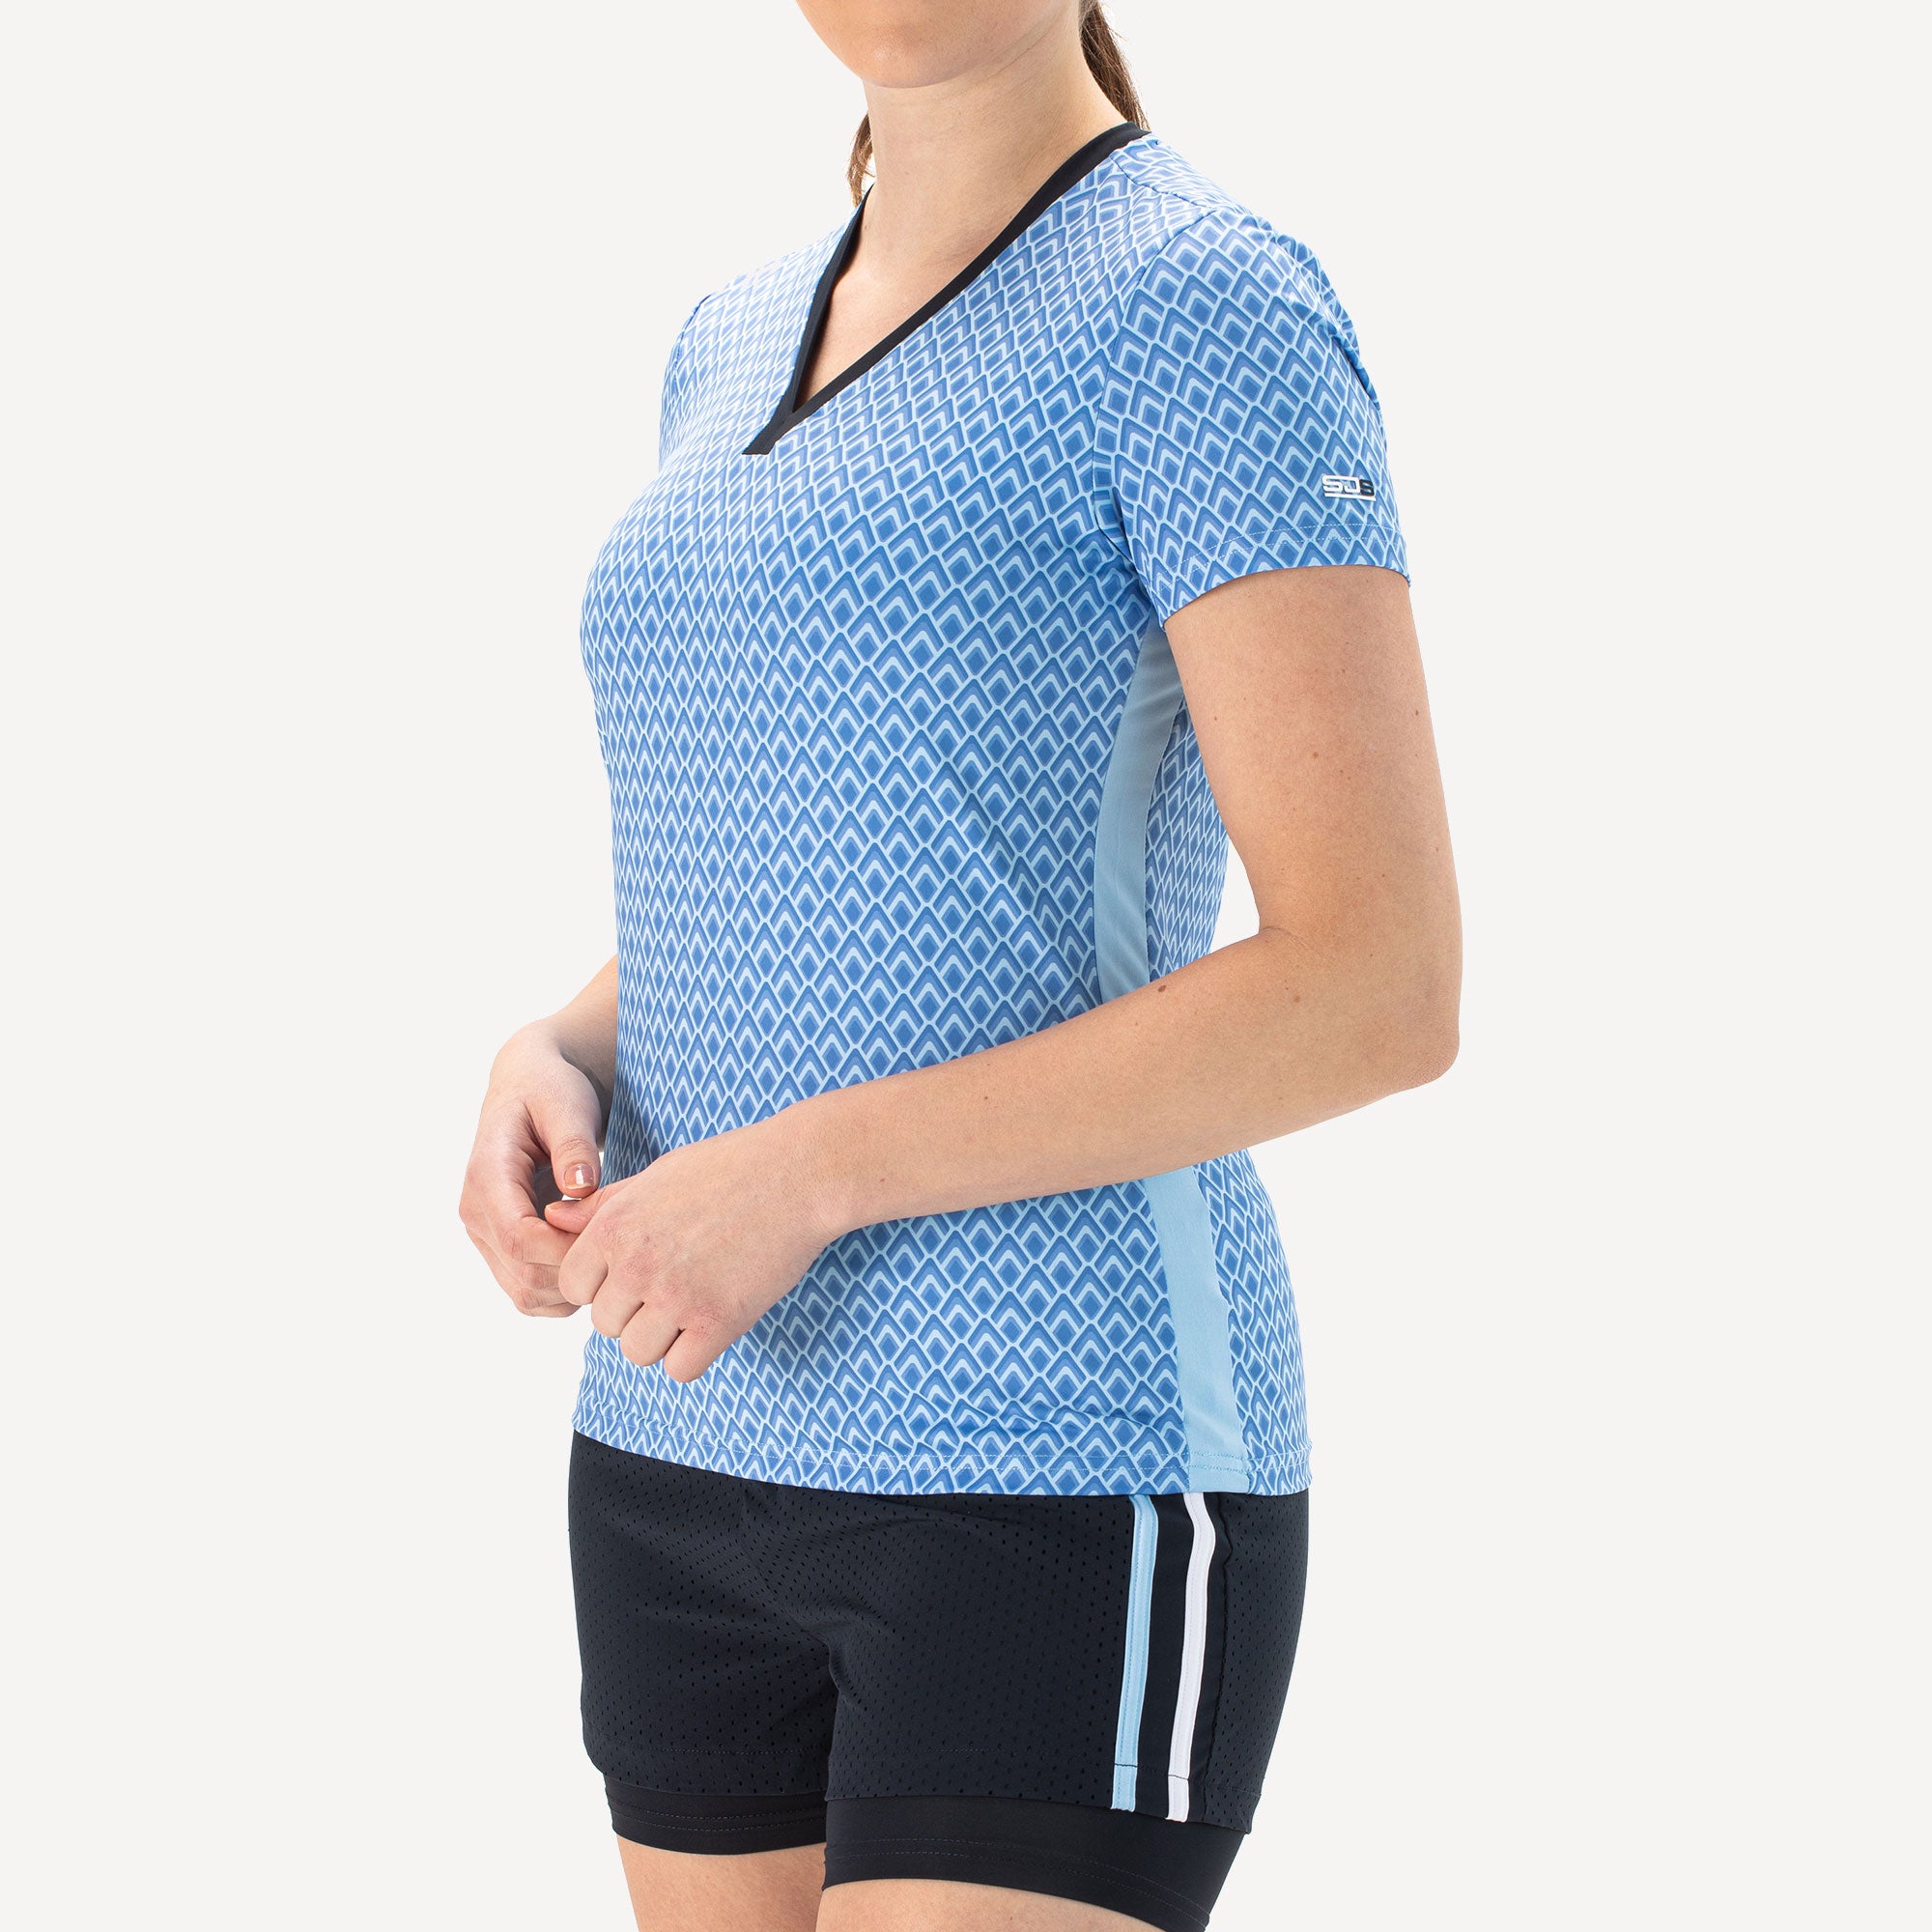 Sjeng Sports Inge Women's Tennis Shirt - Blue (1)